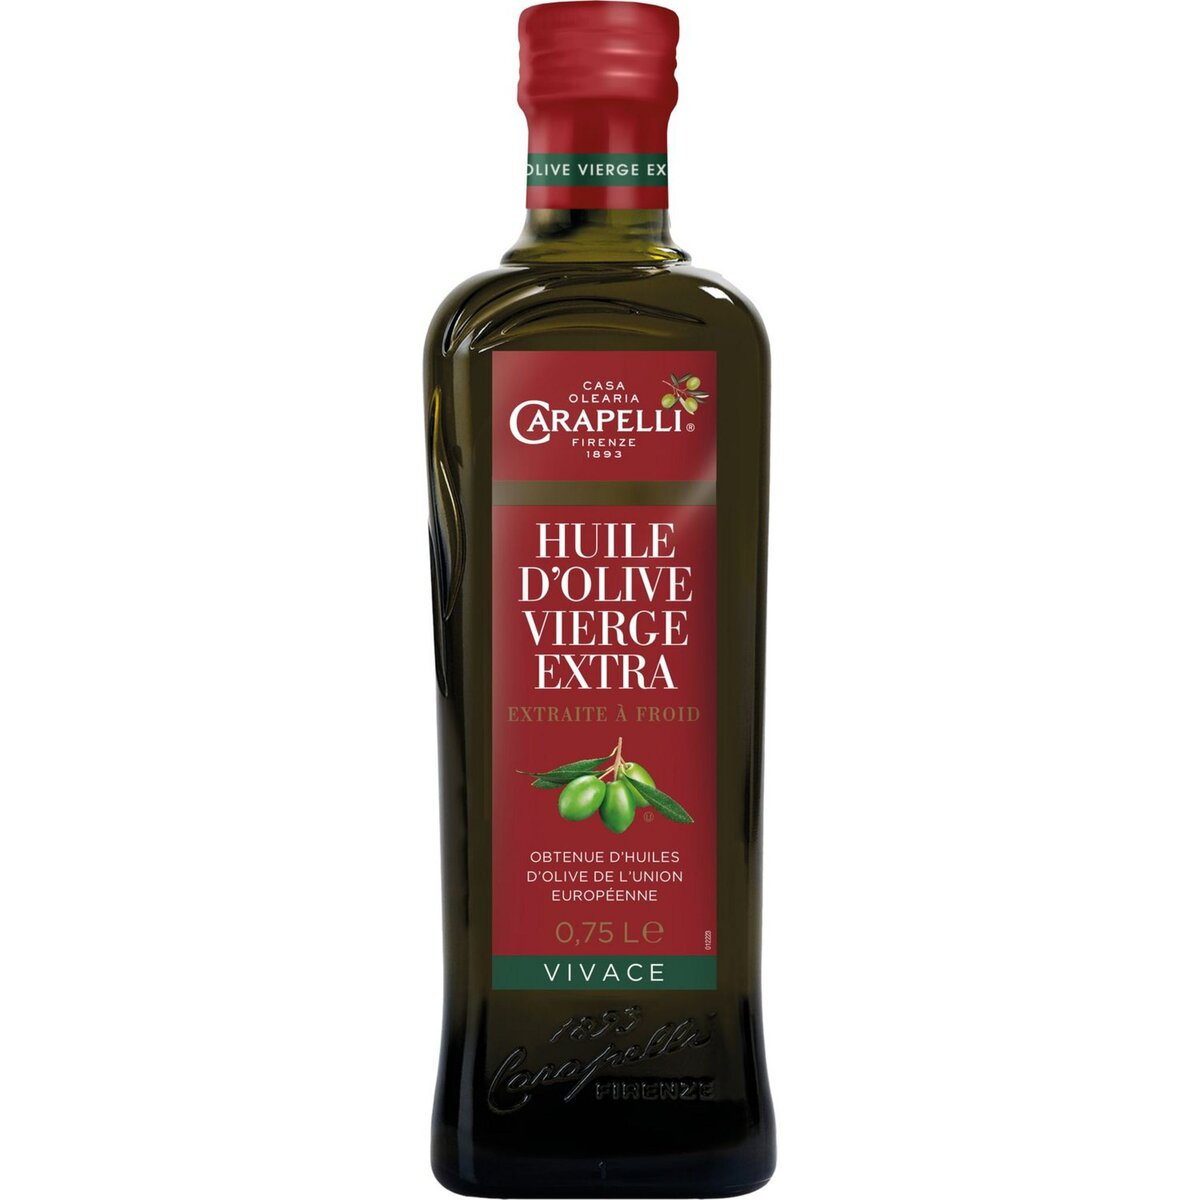 CARAPELLI Carapelli Huile d'olive vierge extra vivace extraite à froid 75cl 75cl